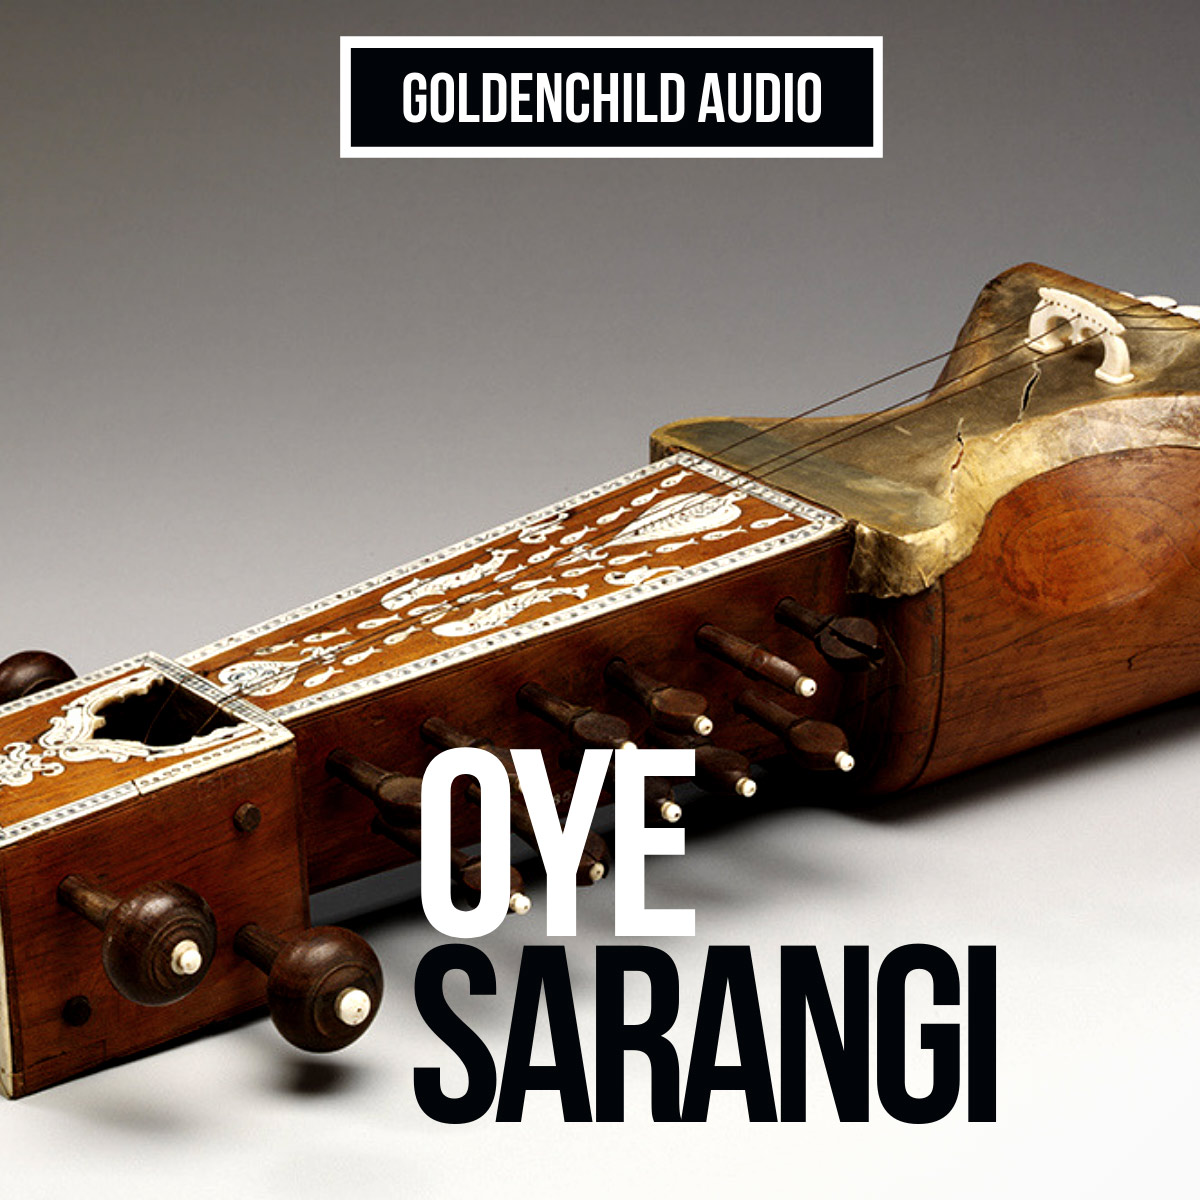 oye sarangi by goldenchild audio